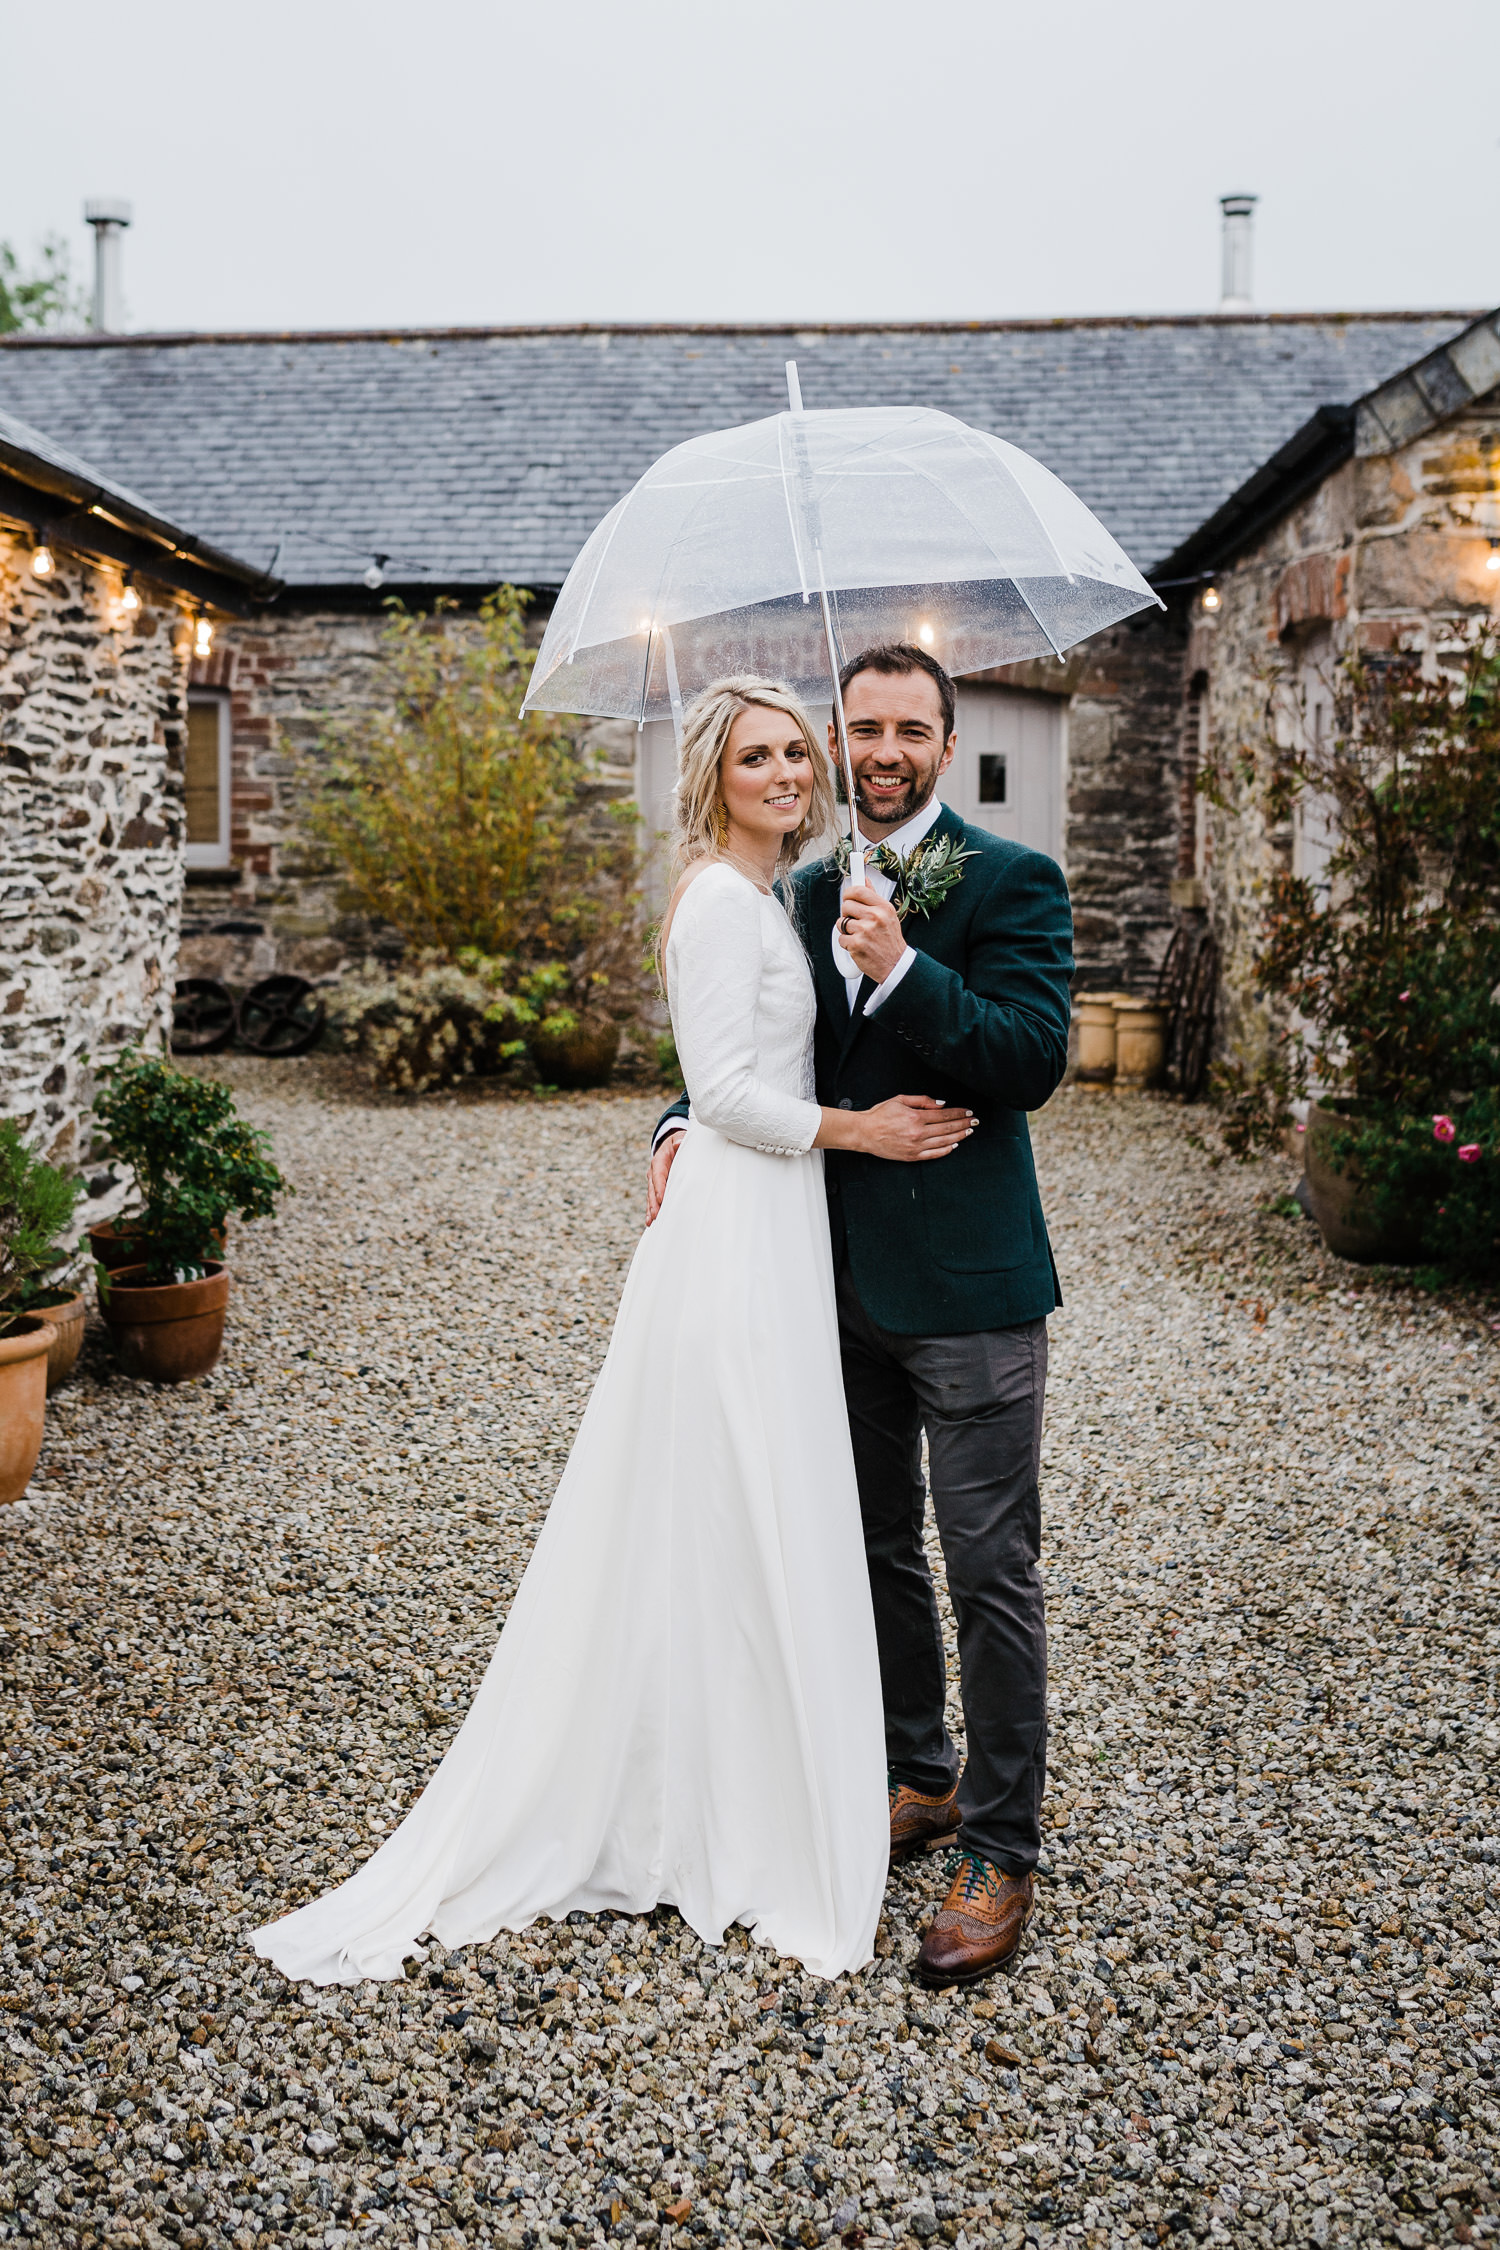 Bride and Groom under clear umbrella.